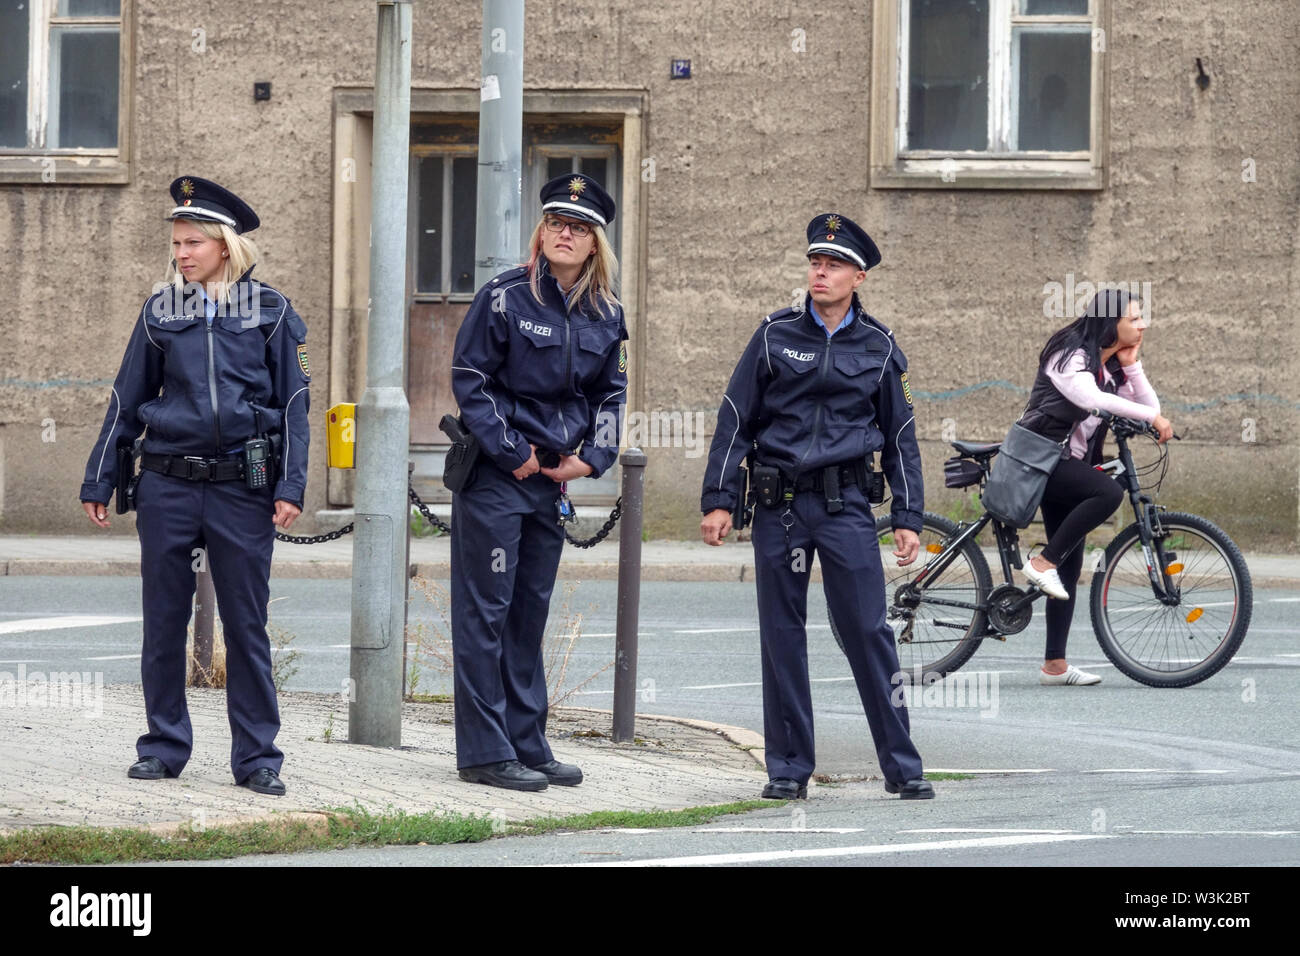 Three police officer on street, Germany german policewoman Stock Photo